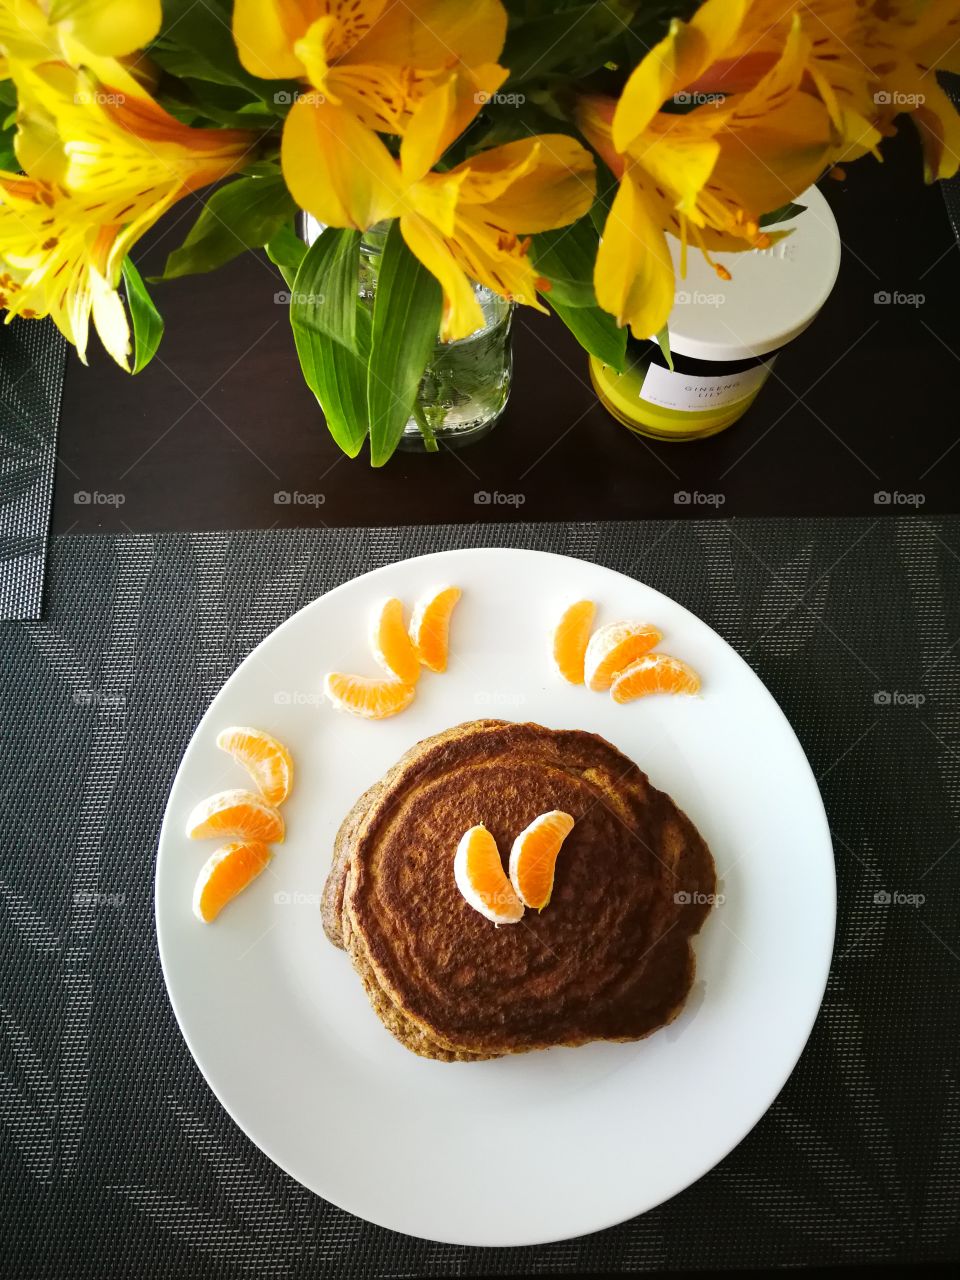 Flowers and breakfast pancakes